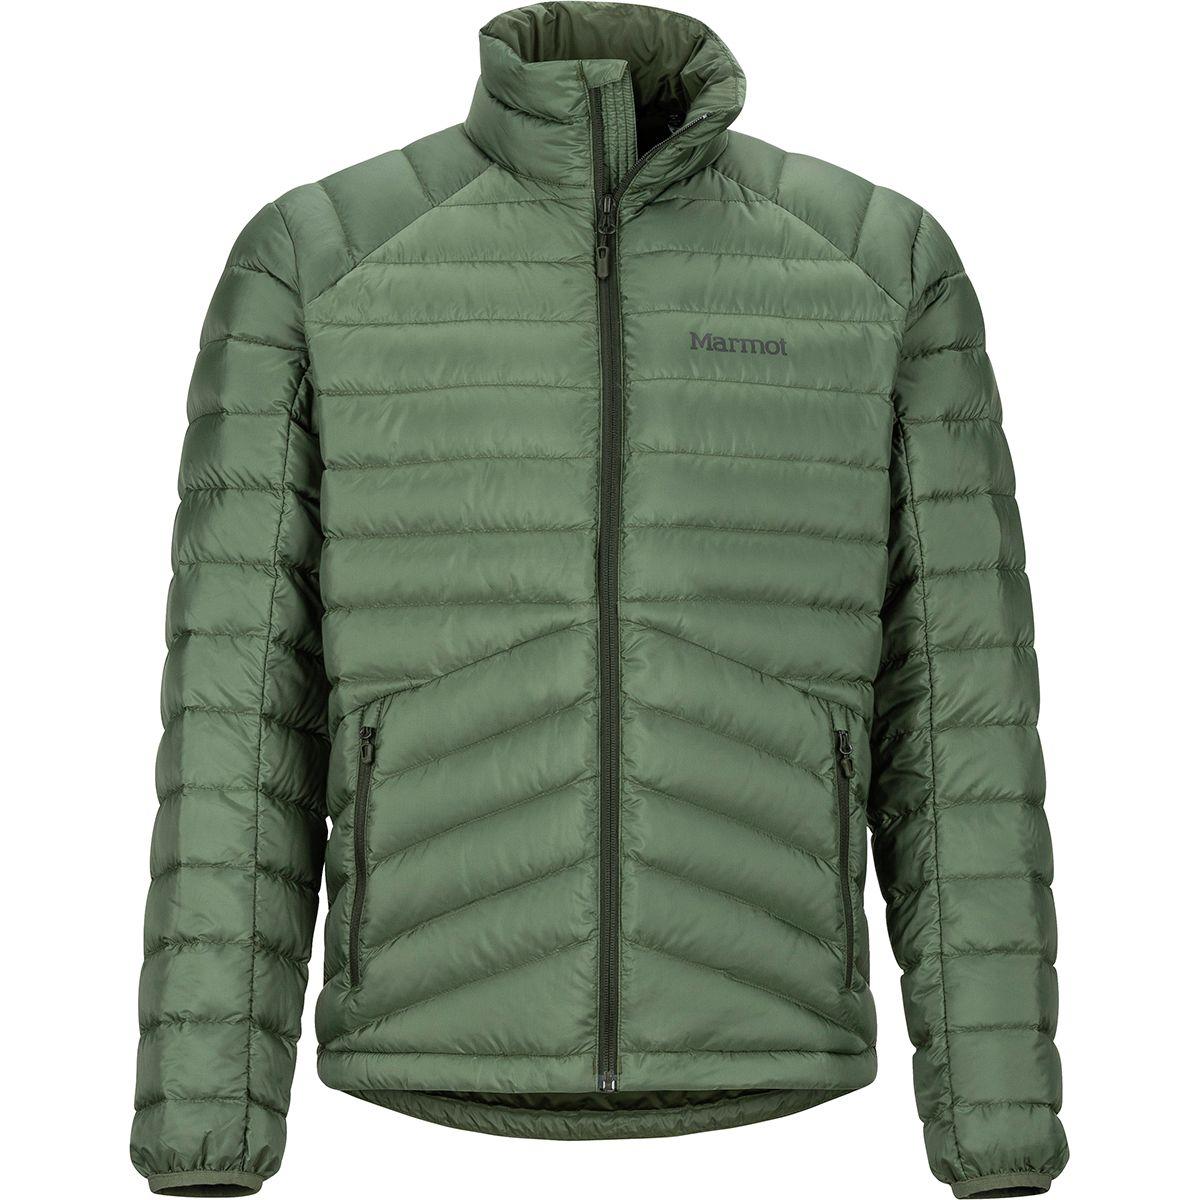 Marmot Highlander Down Jacket in Crocodile (Green) for Men - Save 1% - Lyst